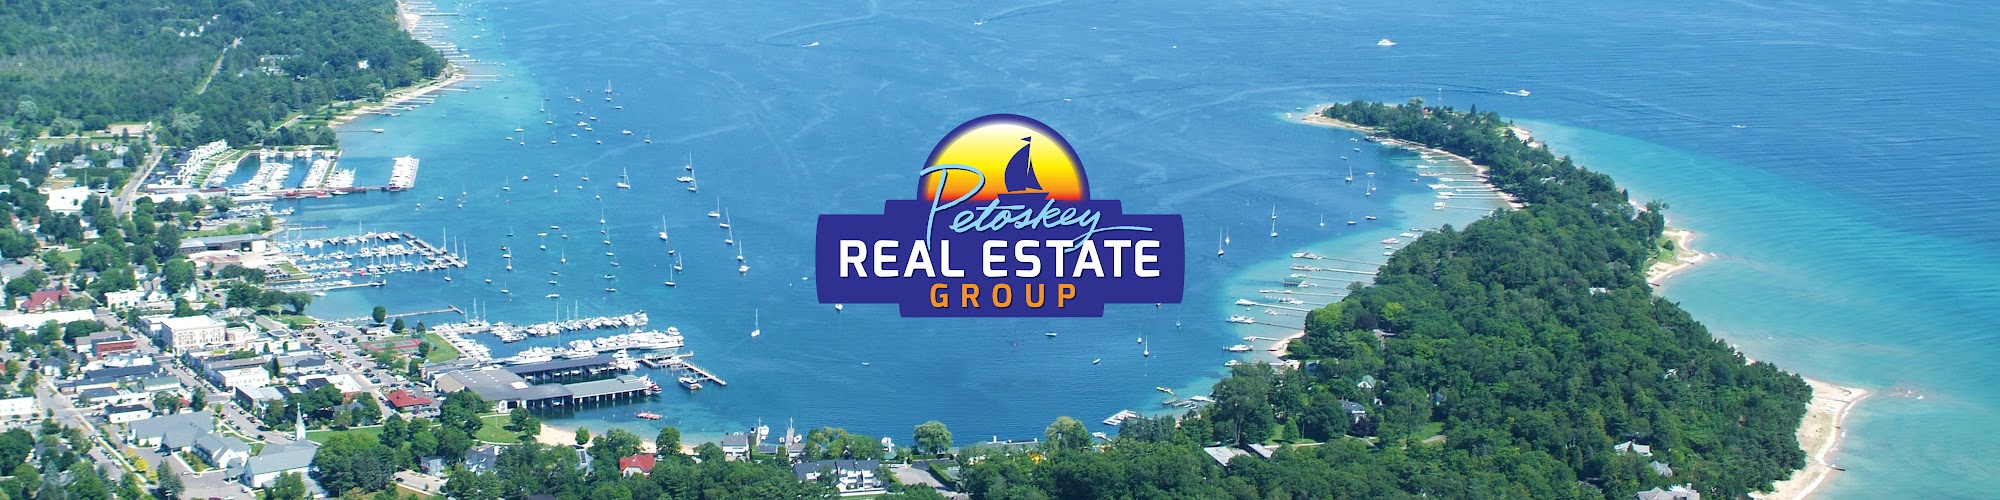 Petoskey Real Estate Group